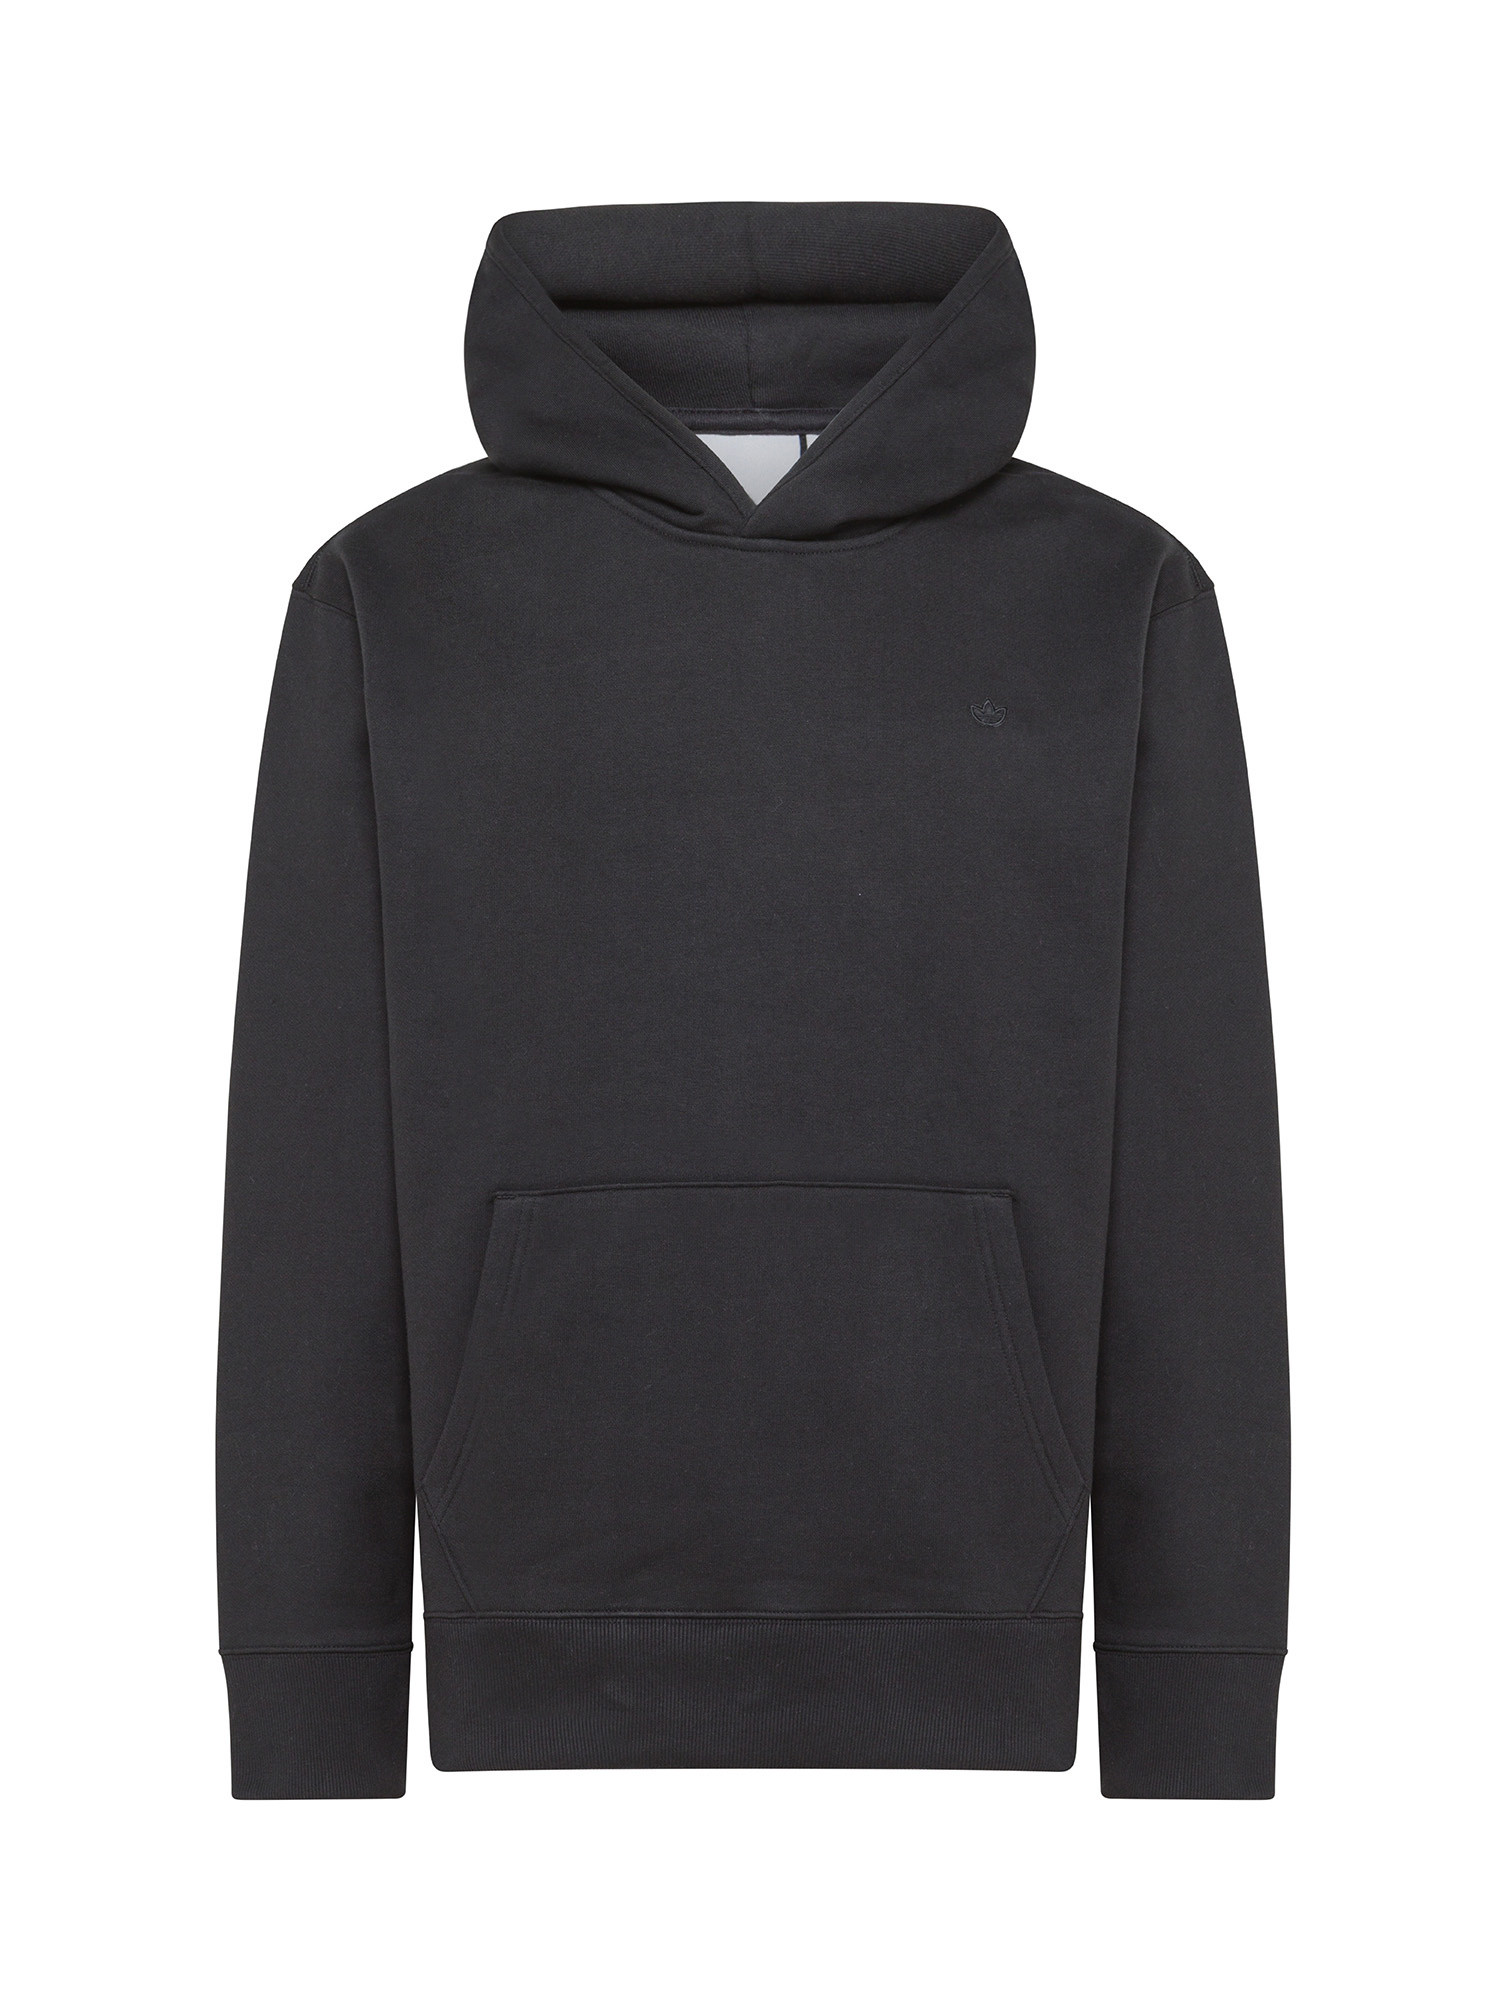 Adidas - Hooded sweatshirt adicolor, Black, large image number 0